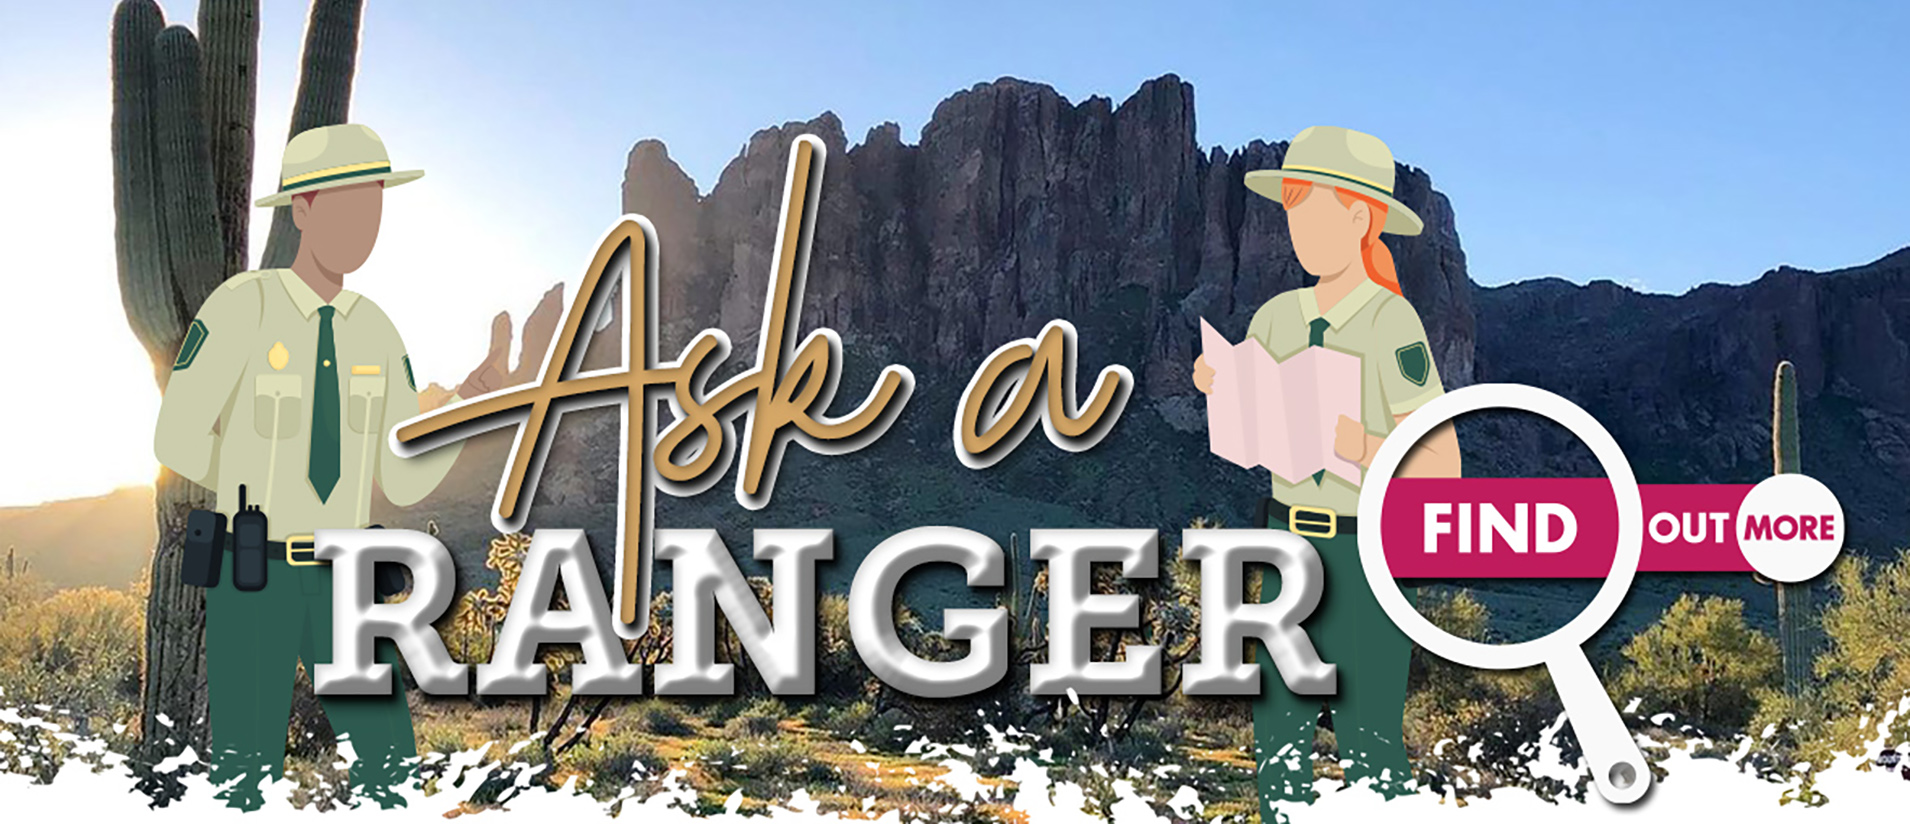 Ask a Ranger program - find out more